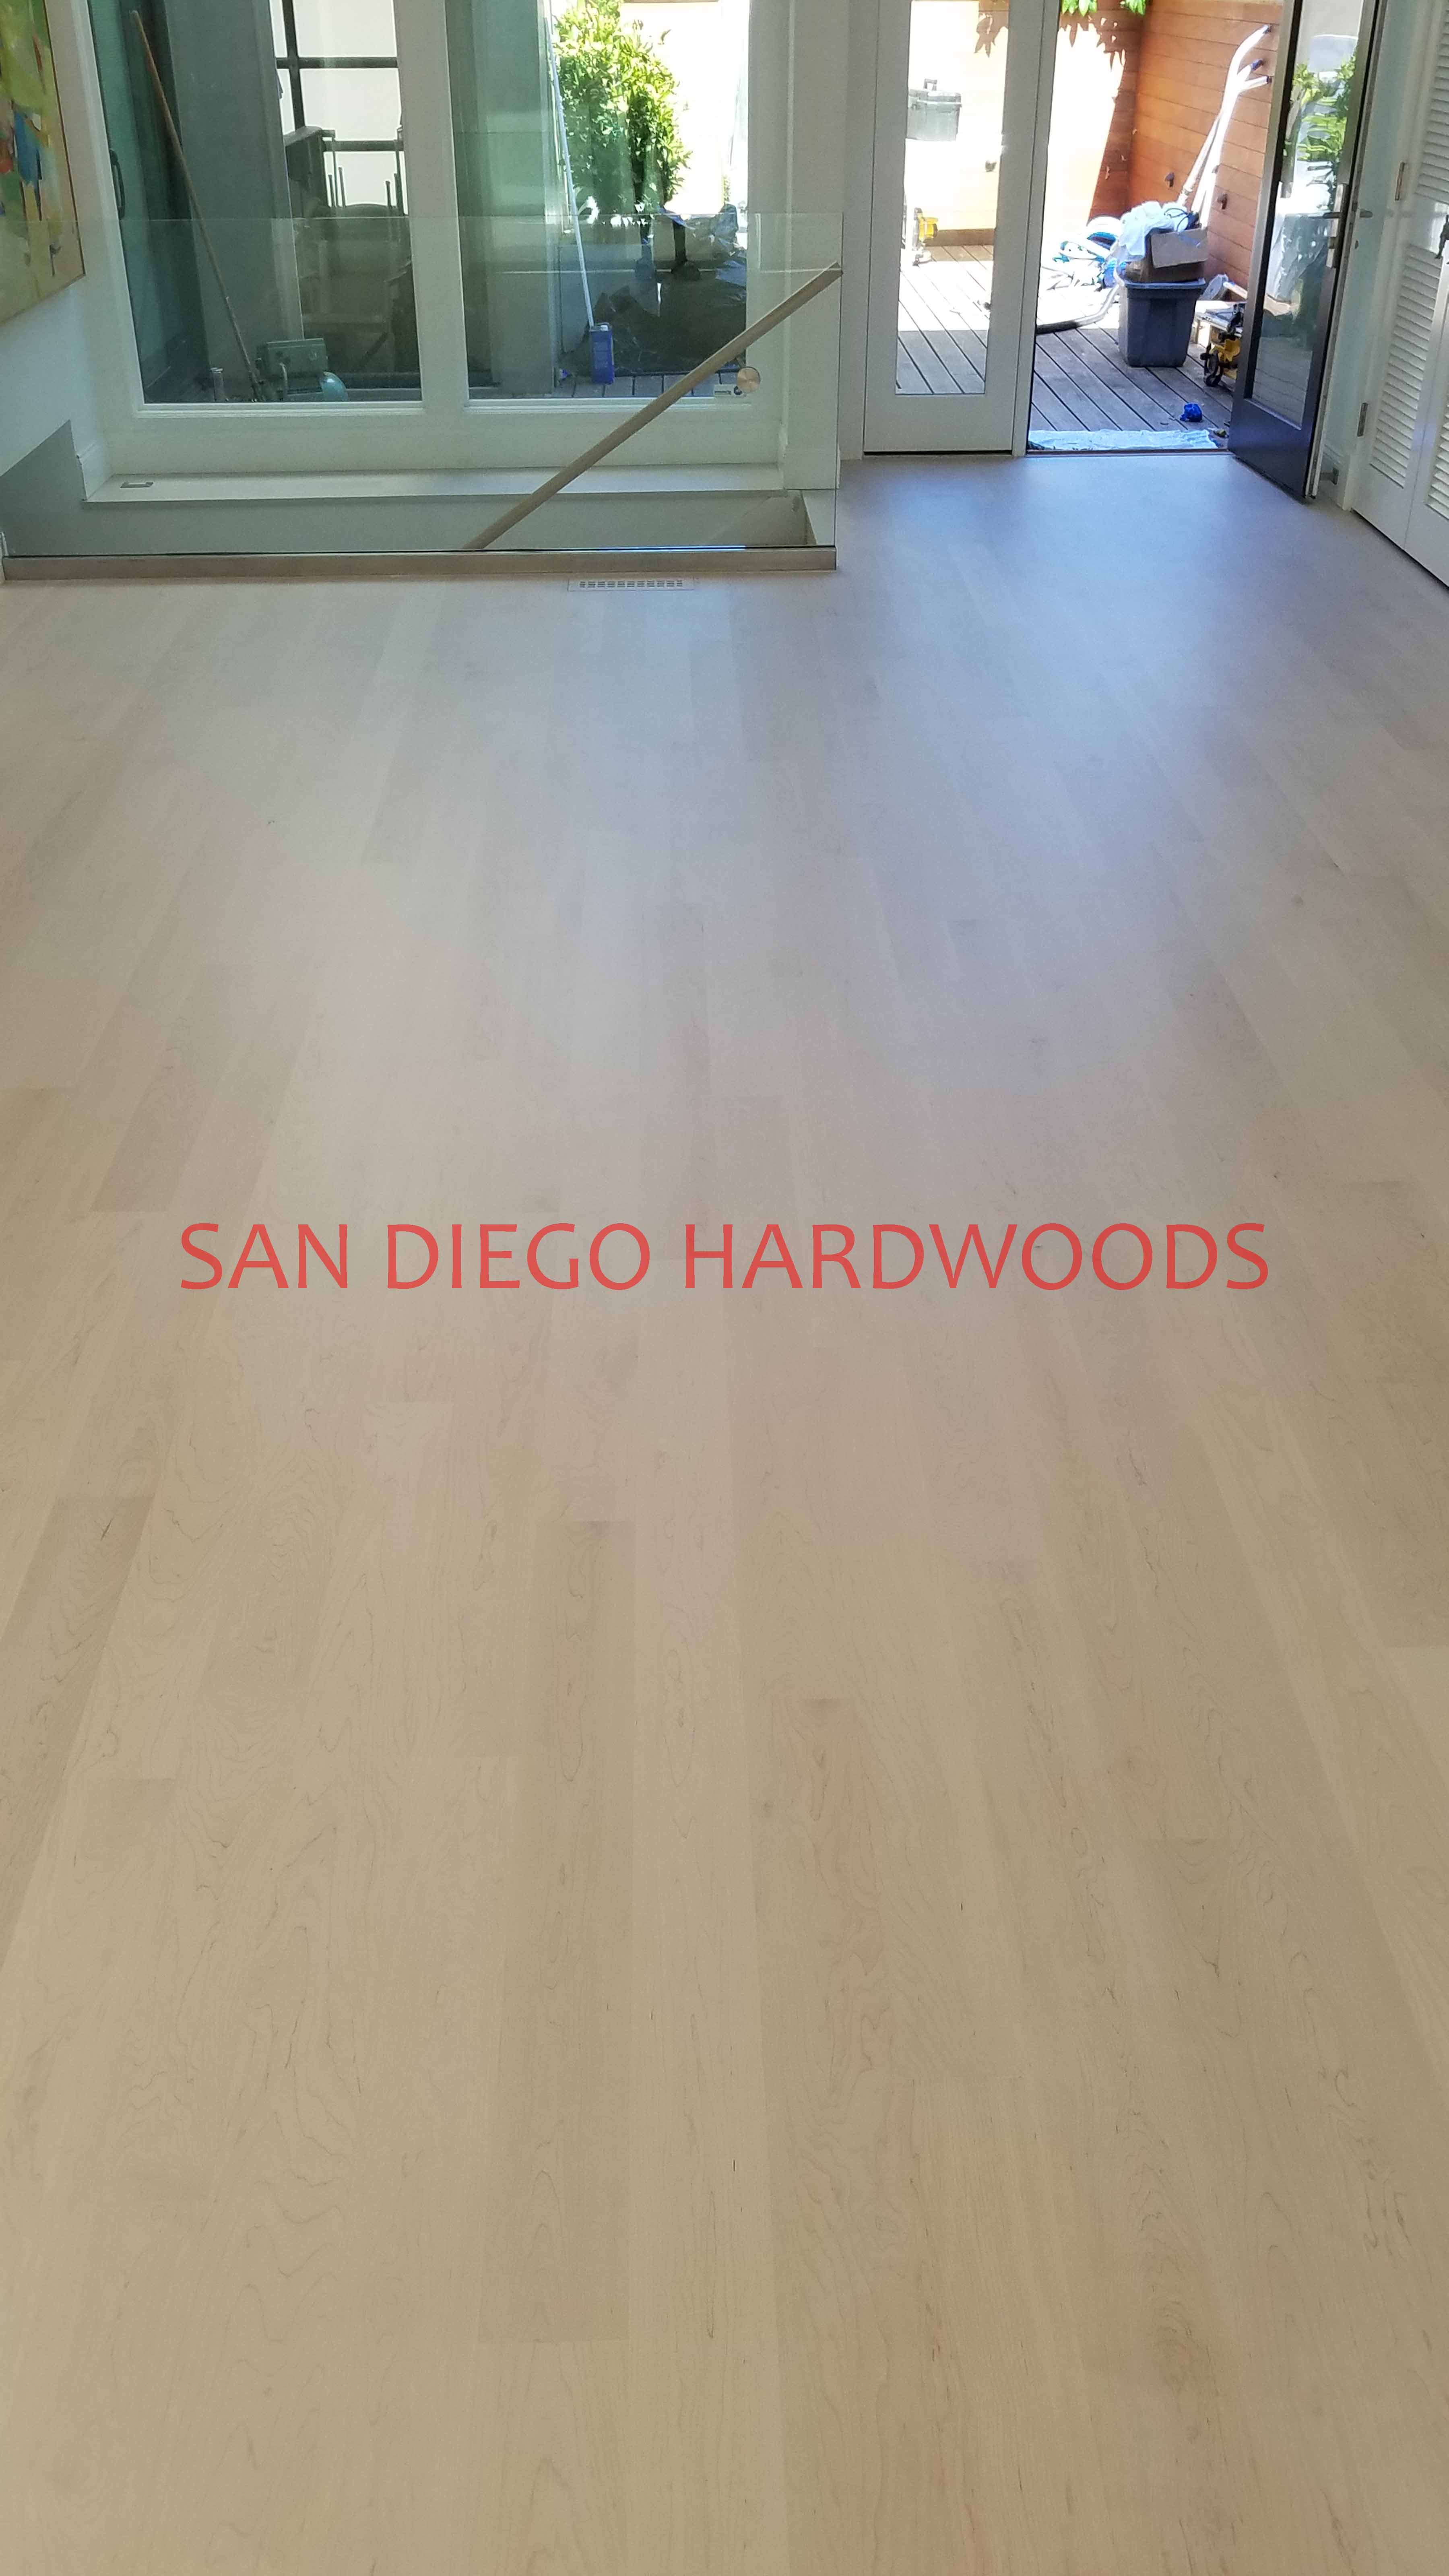 Del Mar Hardwood Floor Refinish Maple white stain traffic natural finish